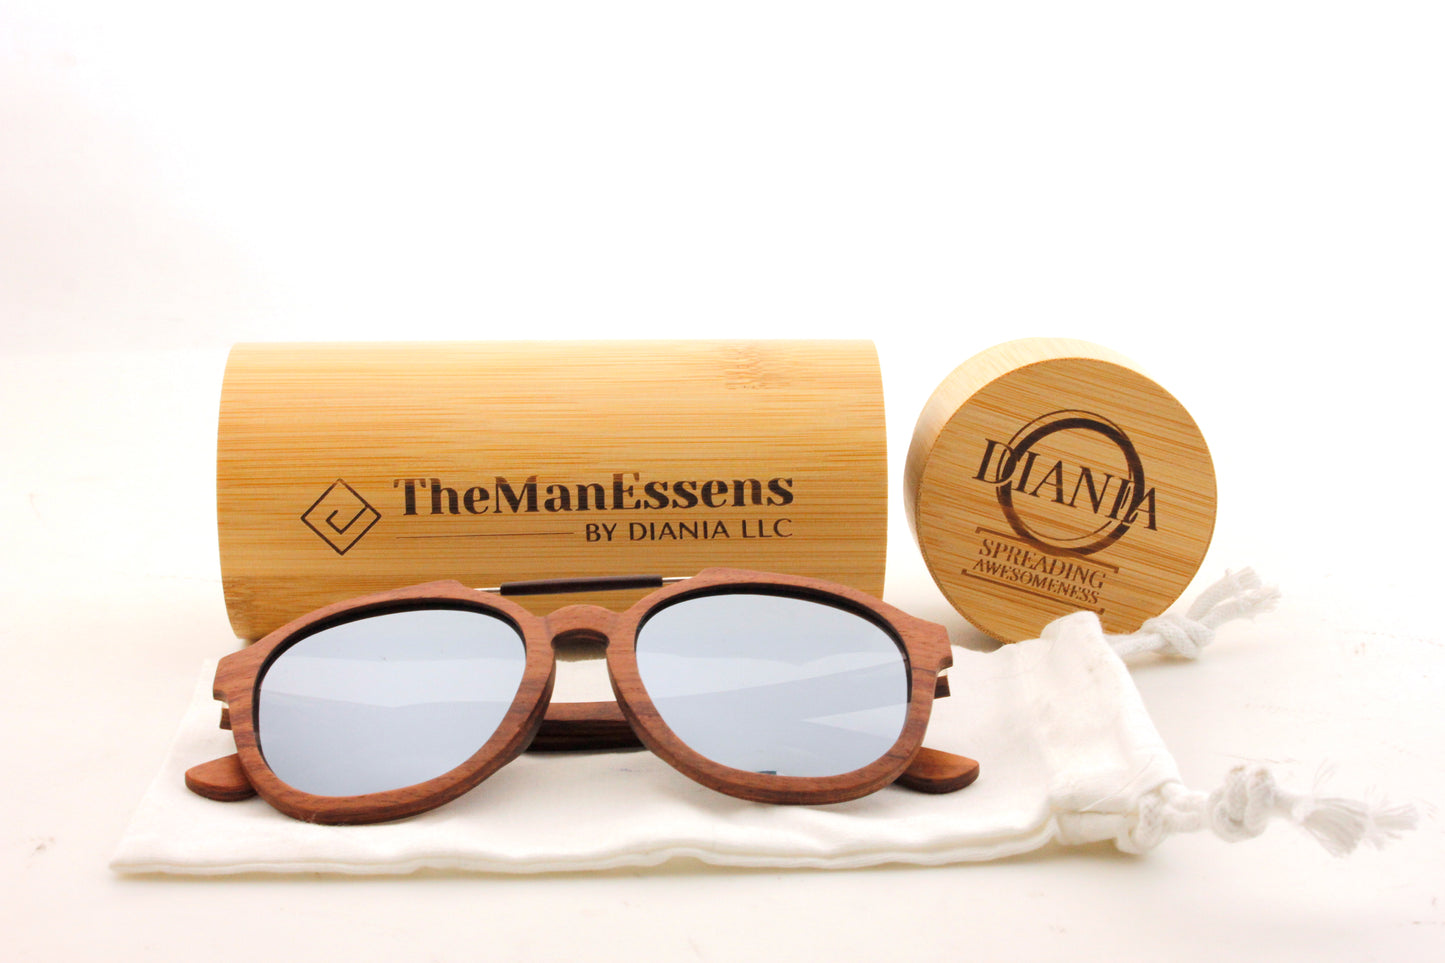 Barcella bubinga wood sunglasses on cotton bag and bamboo case on the back